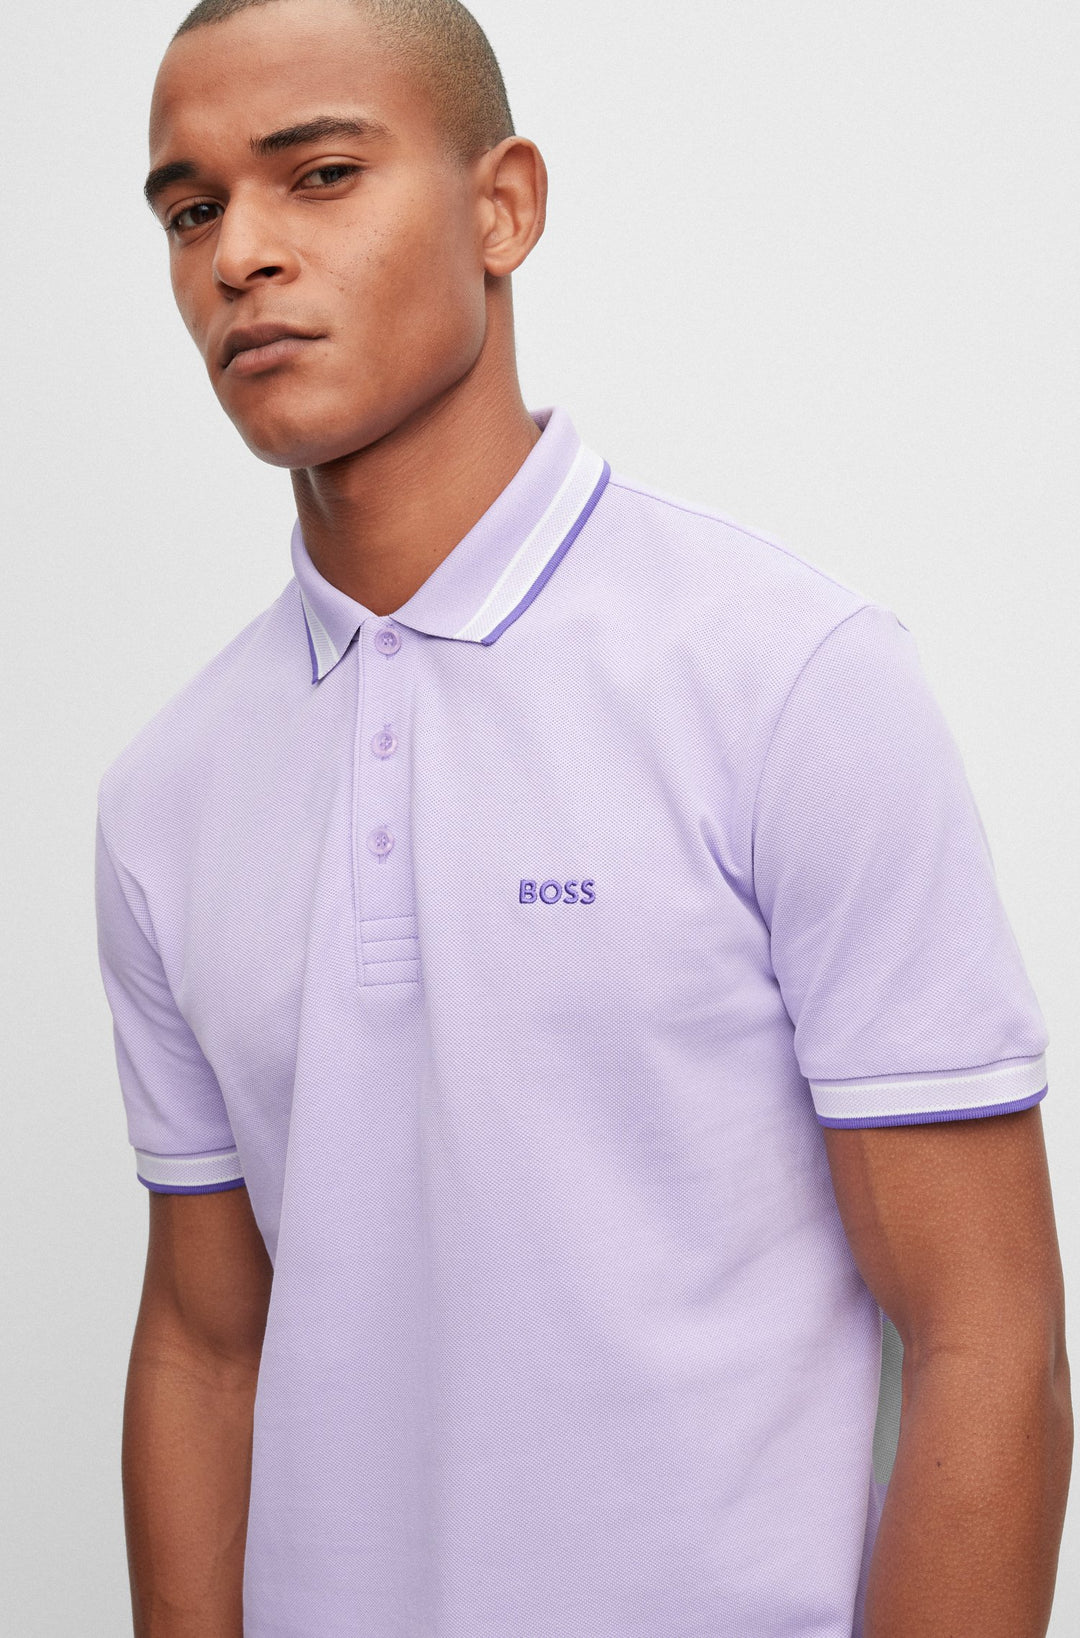 Hugo Boss Paddy Polo Shirt Light Purple - Urban Menswear